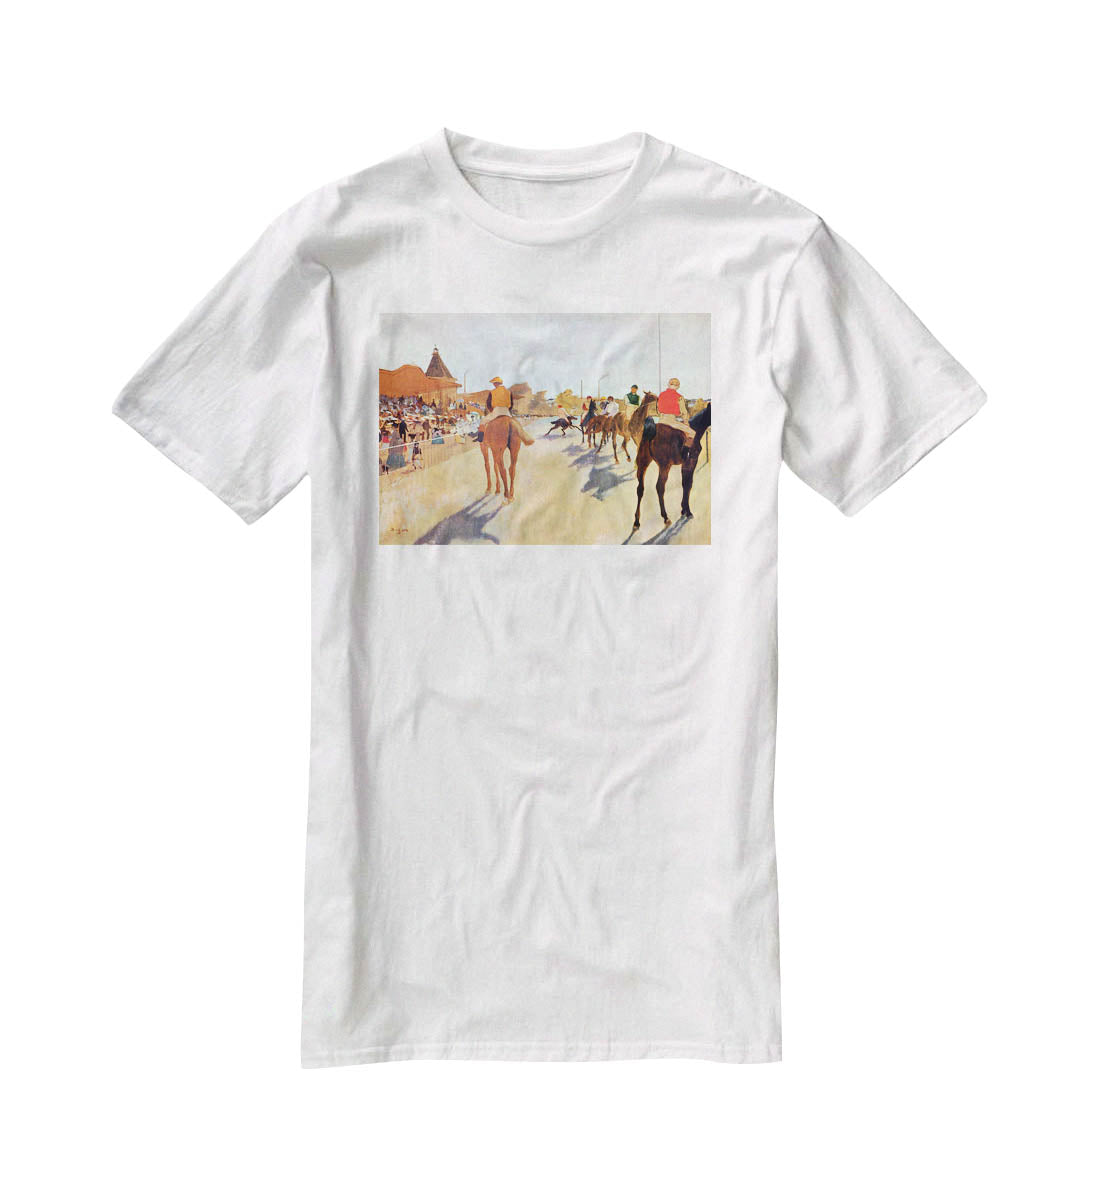 Jockeys in front of the grandstand by Degas T-Shirt - Canvas Art Rocks - 5